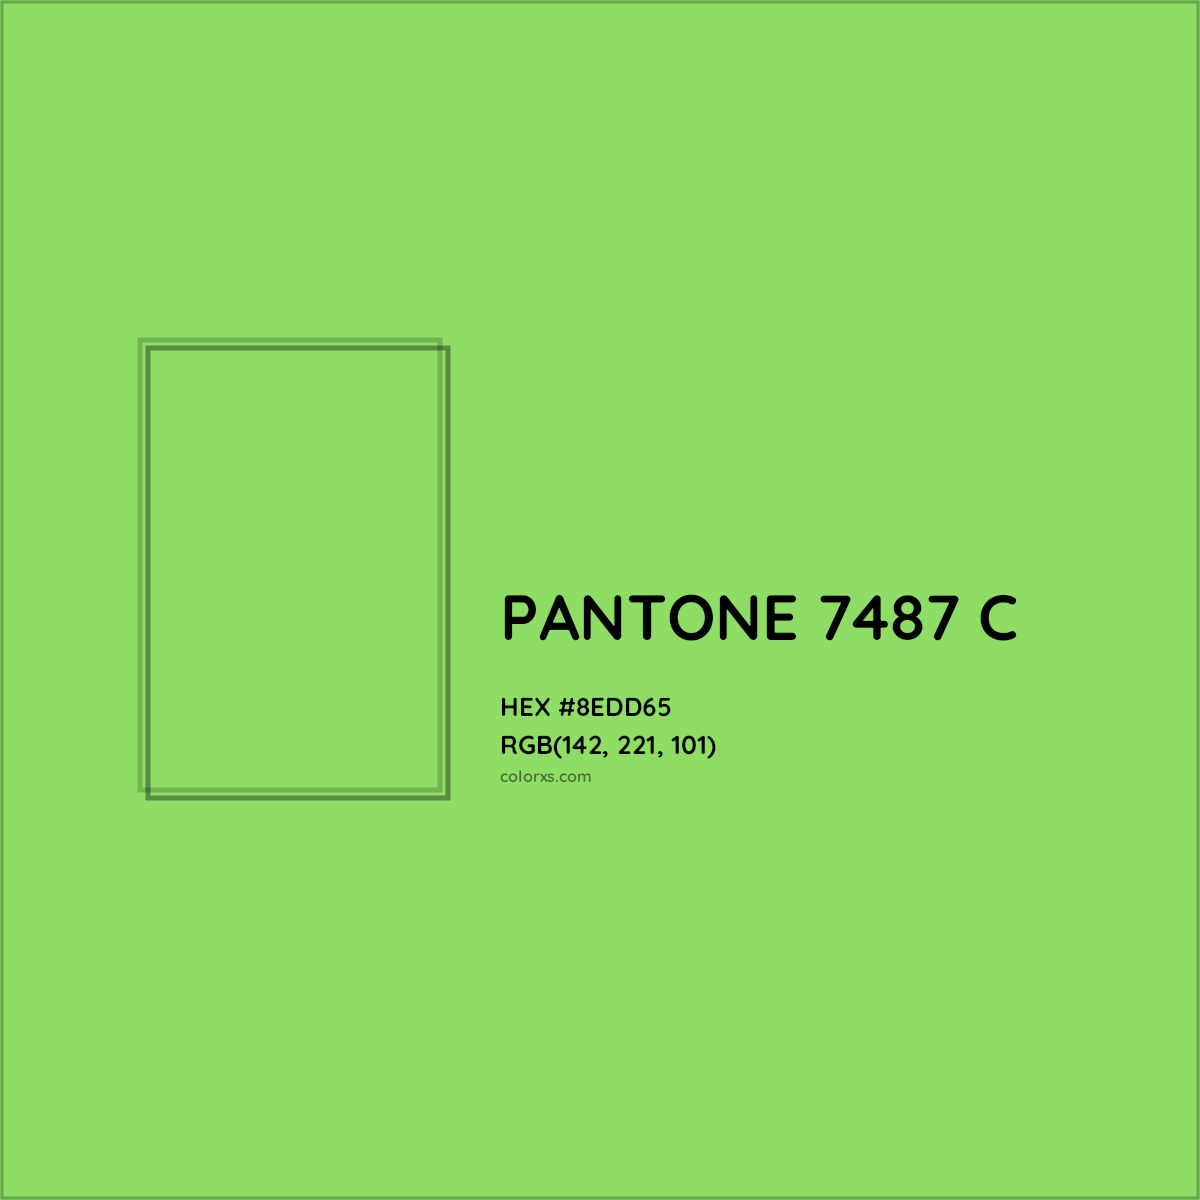 HEX #8EDD65 PANTONE 7487 C CMS Pantone PMS - Color Code